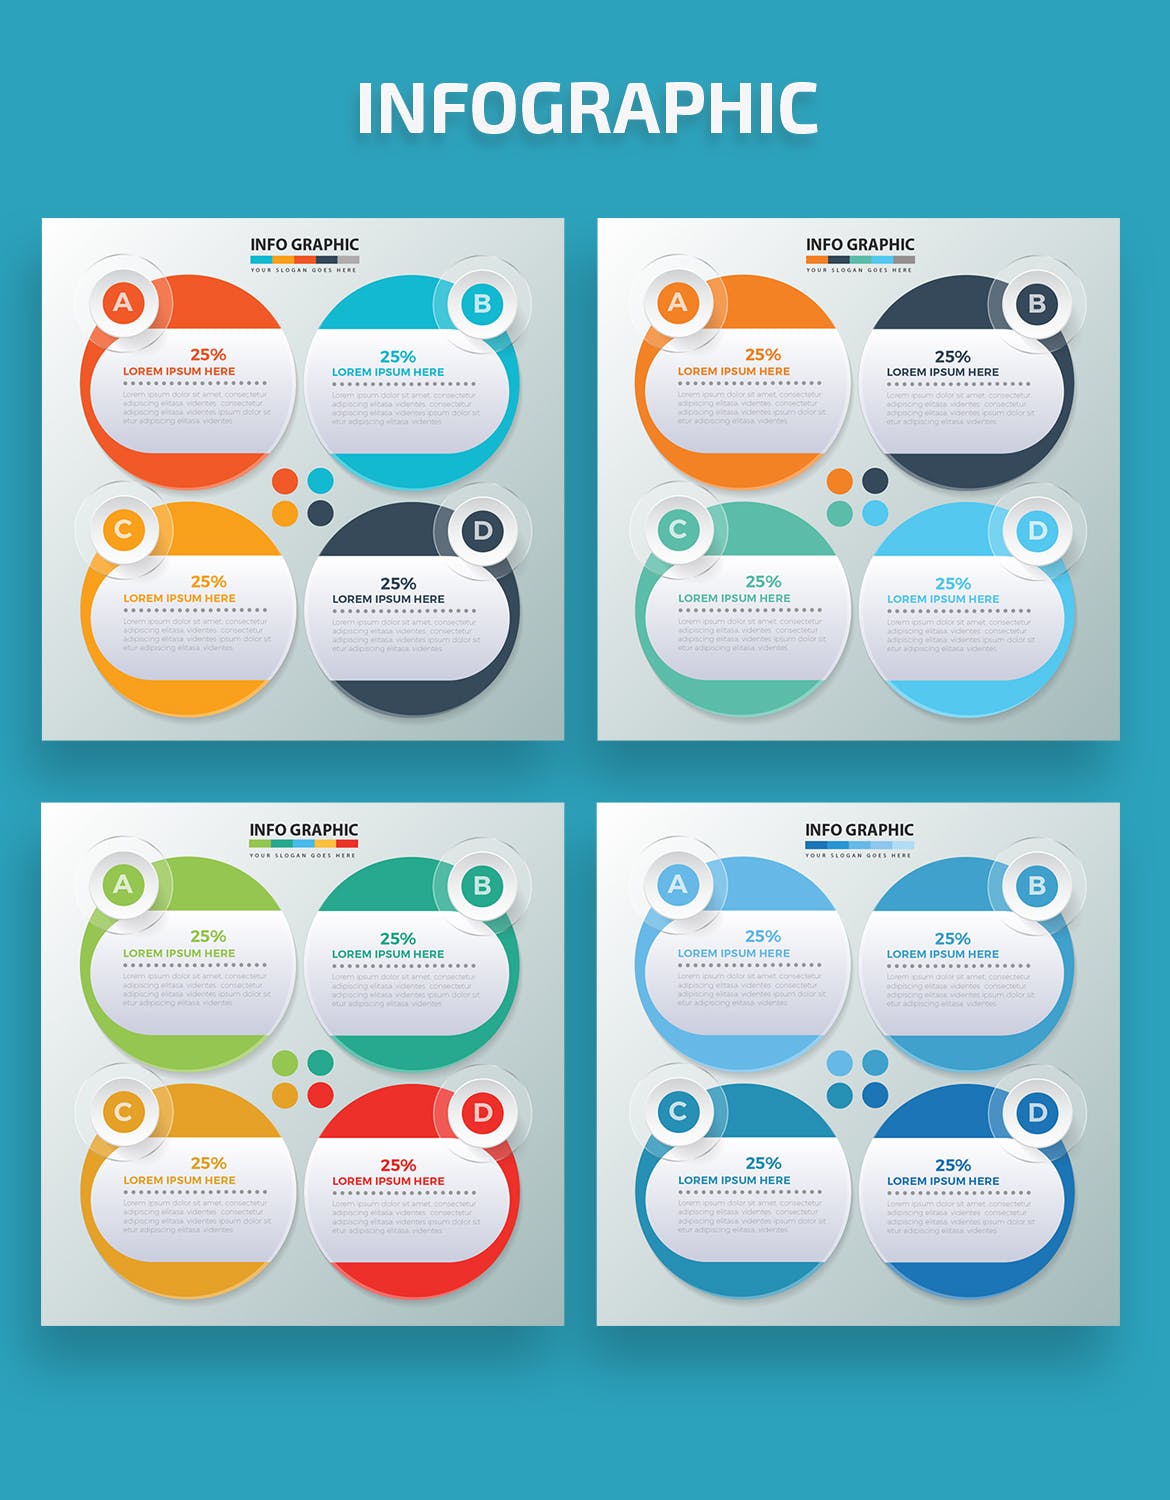 流程步骤圆形图形信息图表设计素材 Infographic Elements Design插图(1)